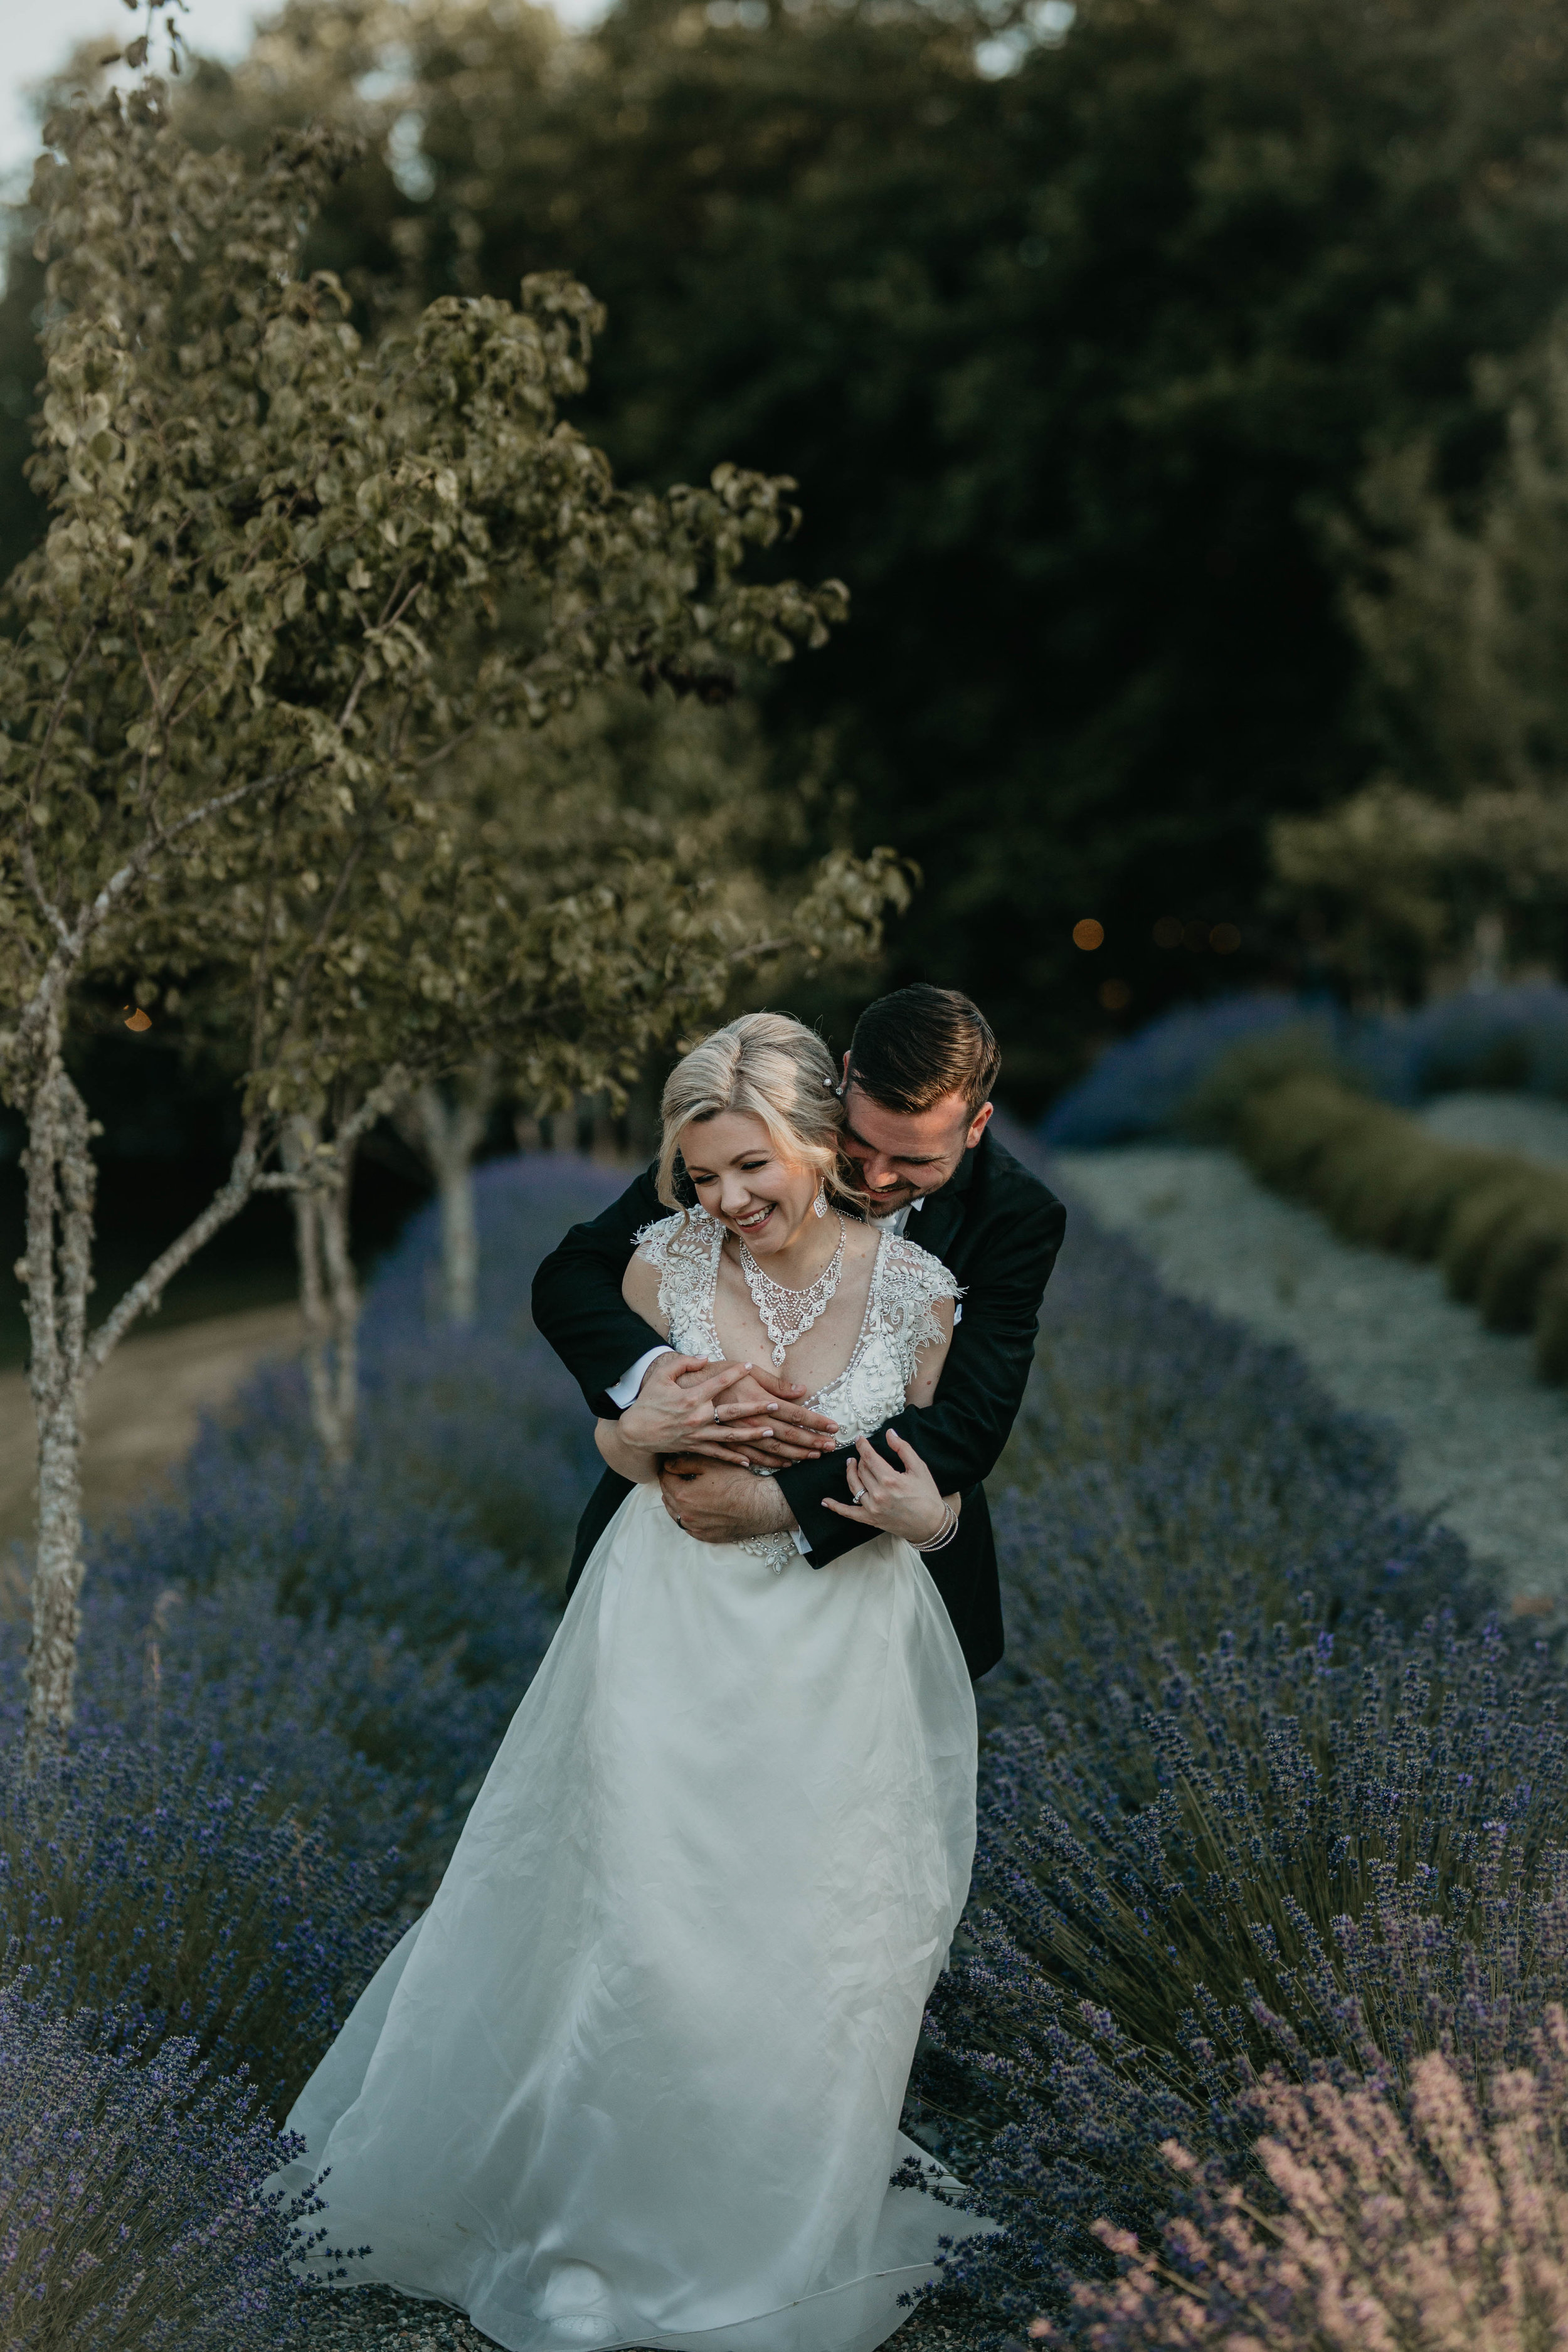 nicole-daacke-photography-kingston-house-bainbride-washington-wedding-photography-summer-wedding-lavendar-field-pacific-northwest-wedding-glam-forest-elopement-photographer-75.jpg